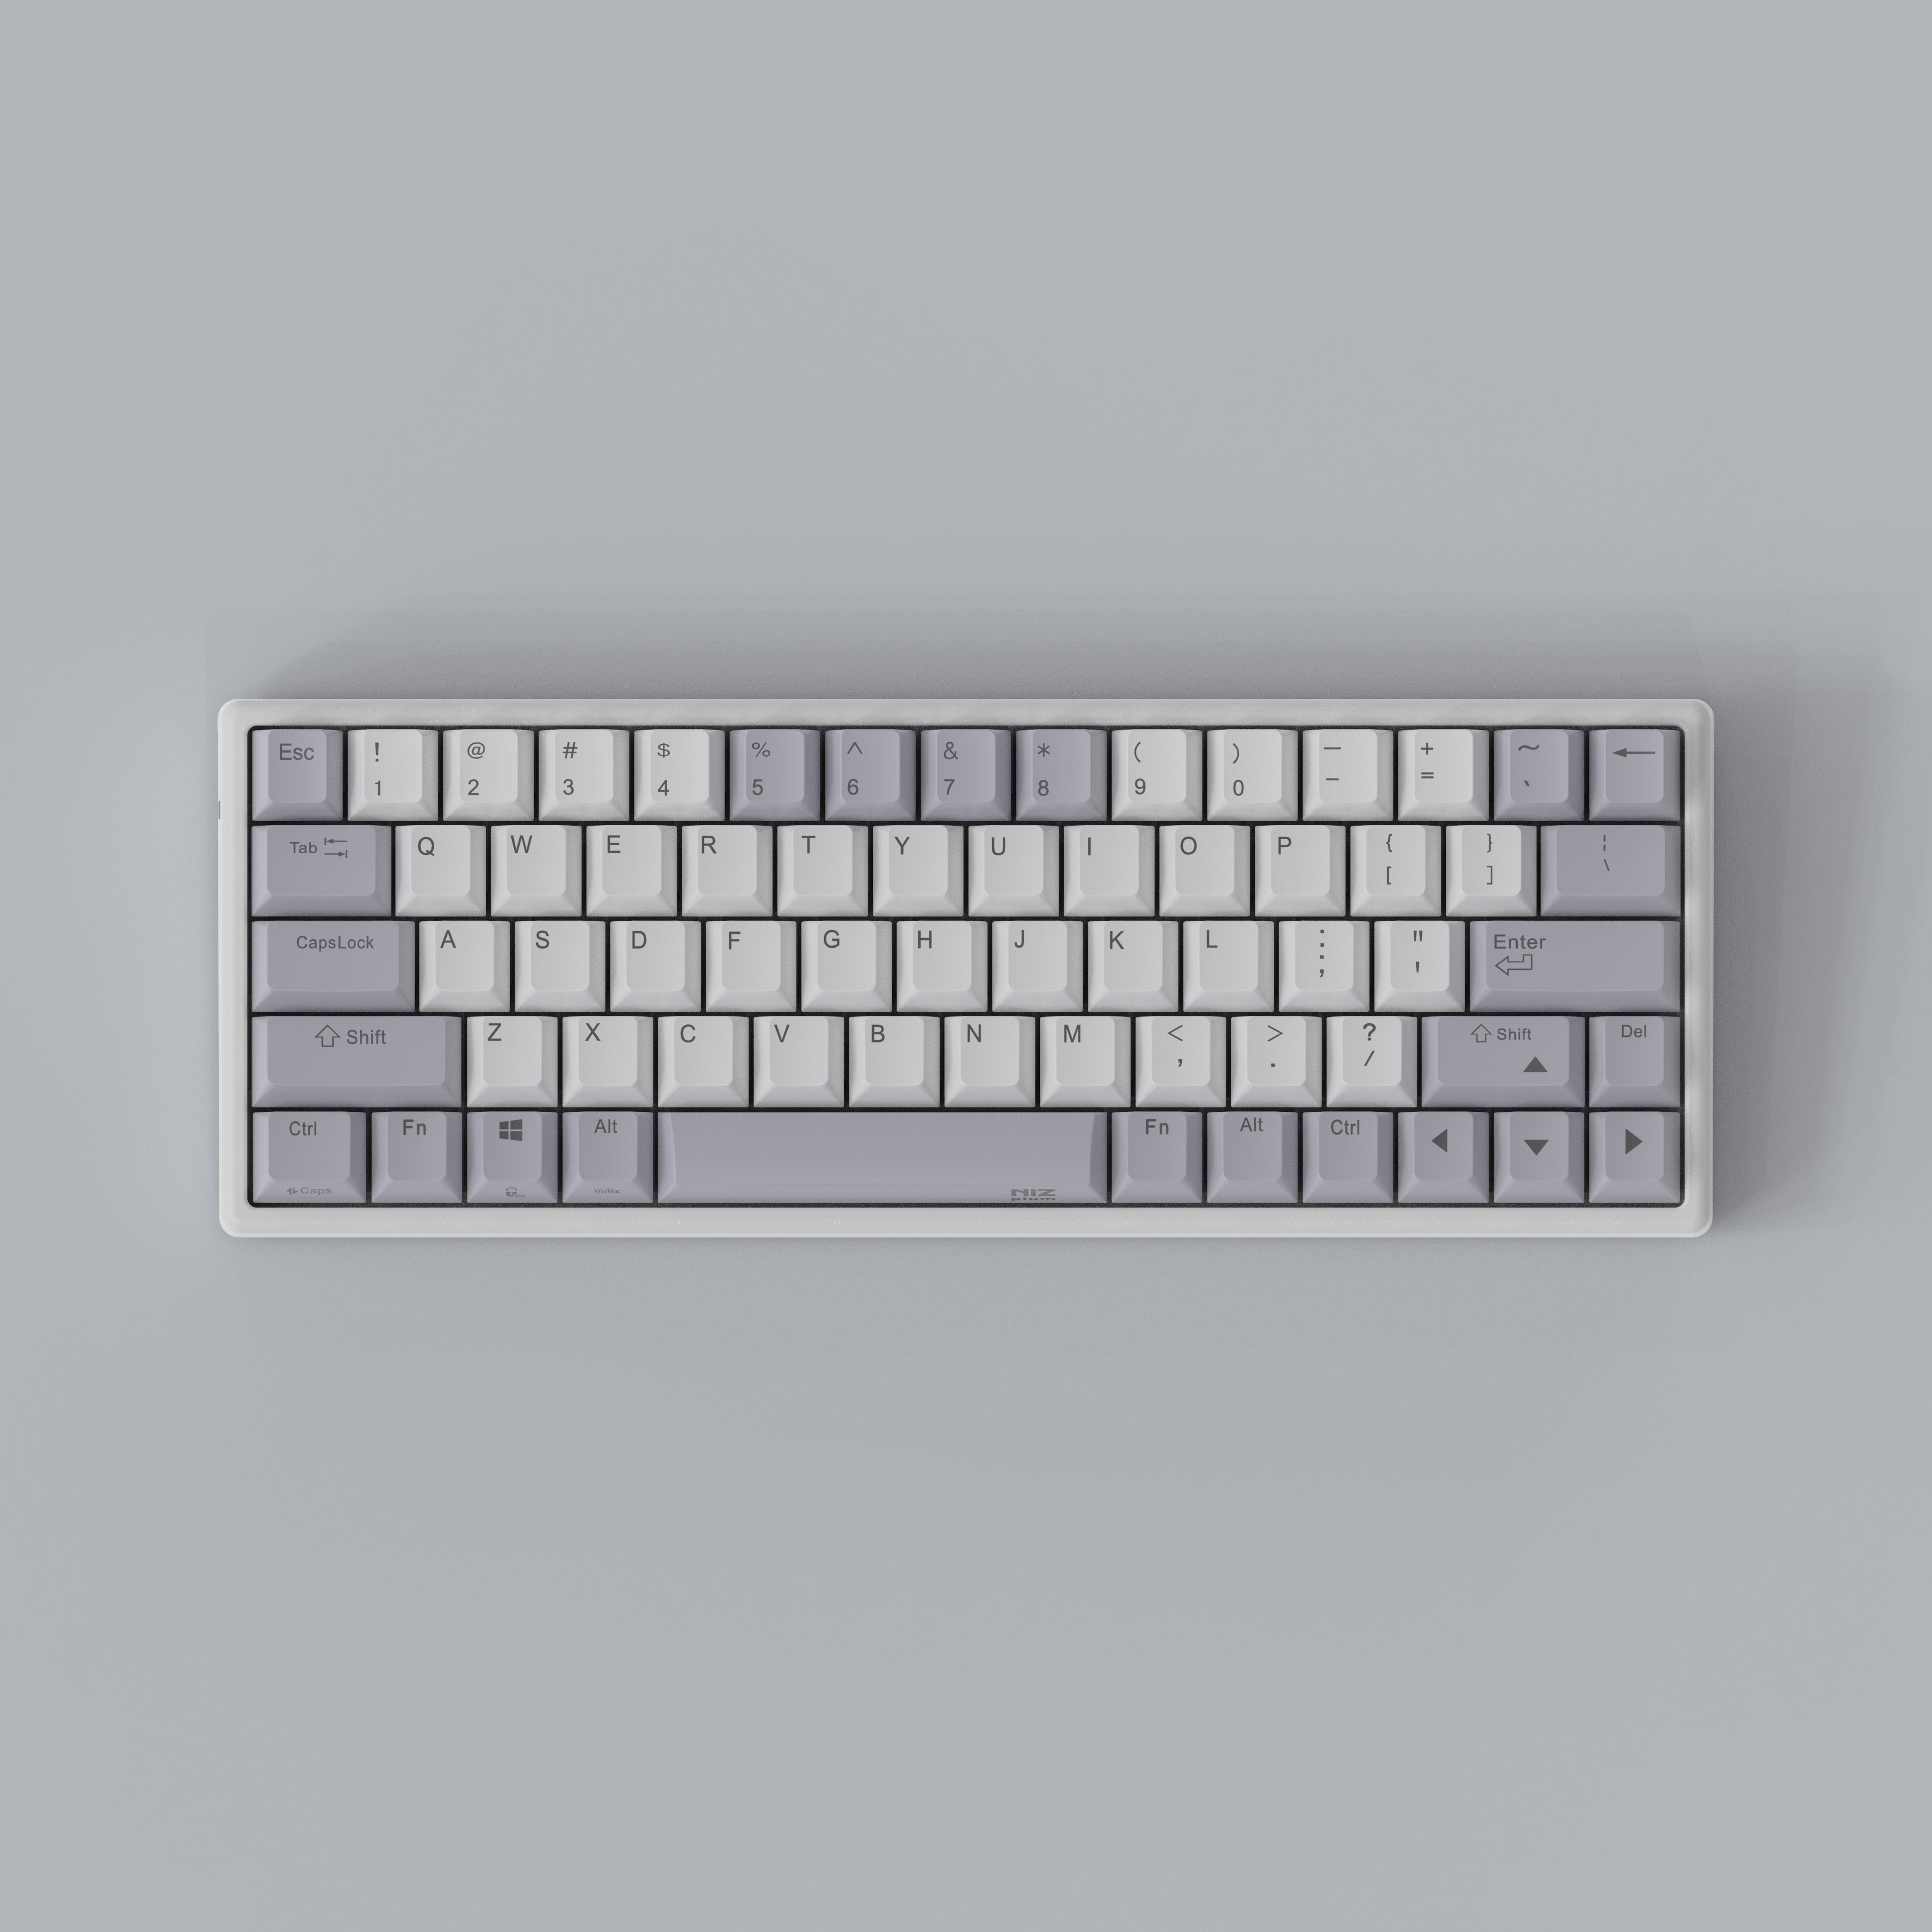 NIZ Keyboard ATOM 66 Capacitive Keyboard - WHITE / ATOM 66 USB 35g